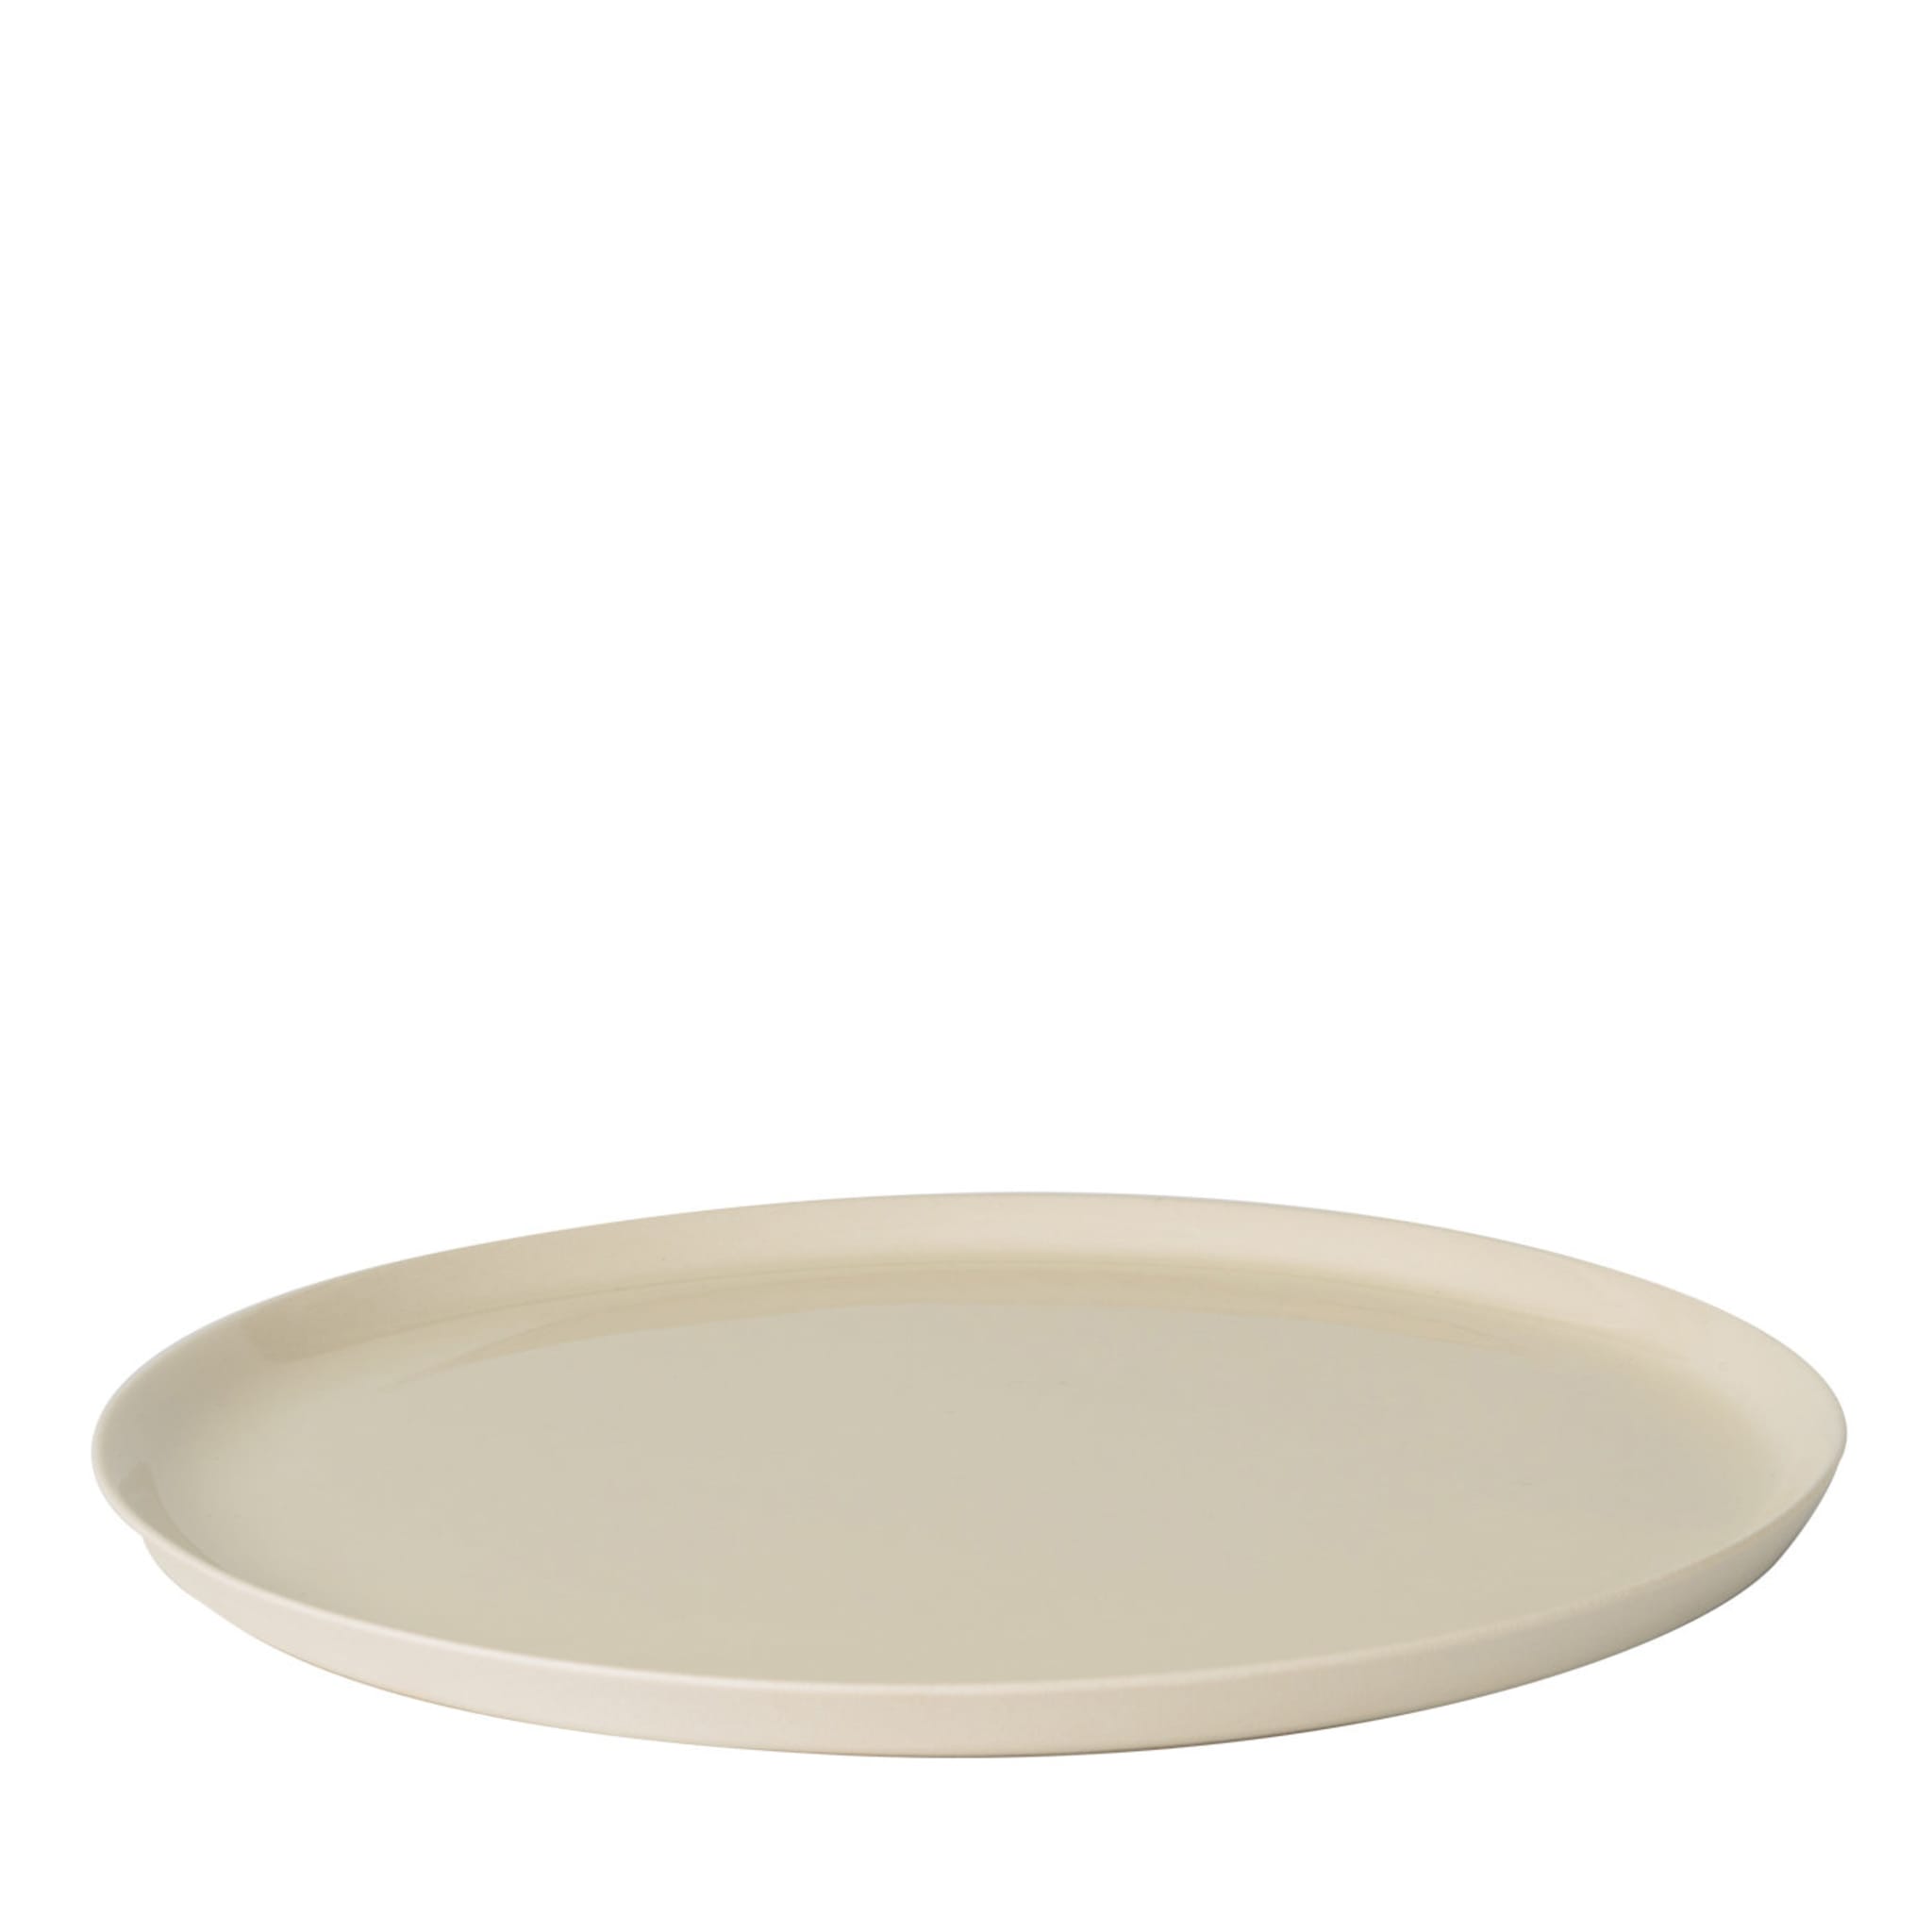 Set of 4 White Ceramic Dessert Plates - Main view